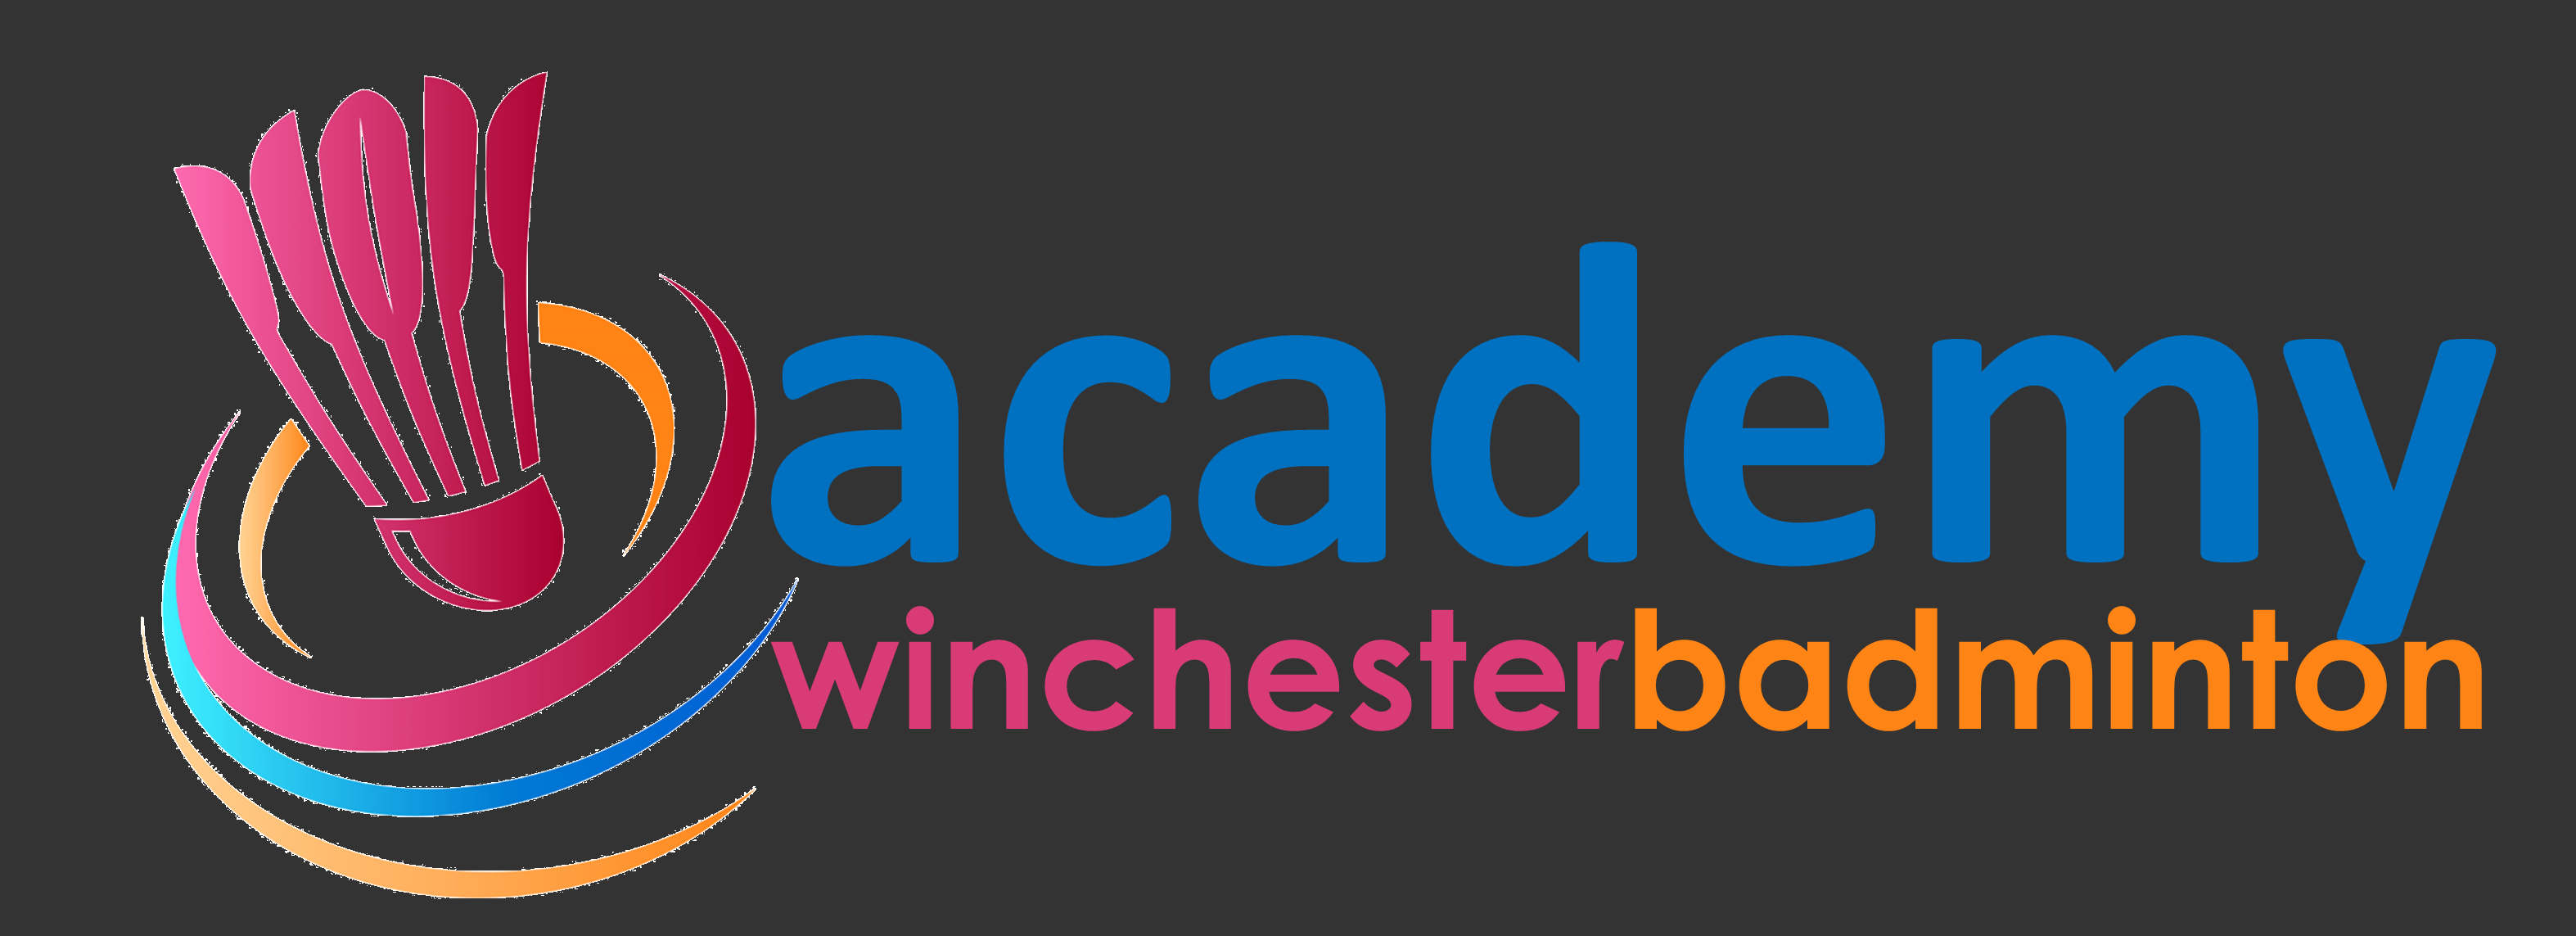 Winchester Badminton Academy